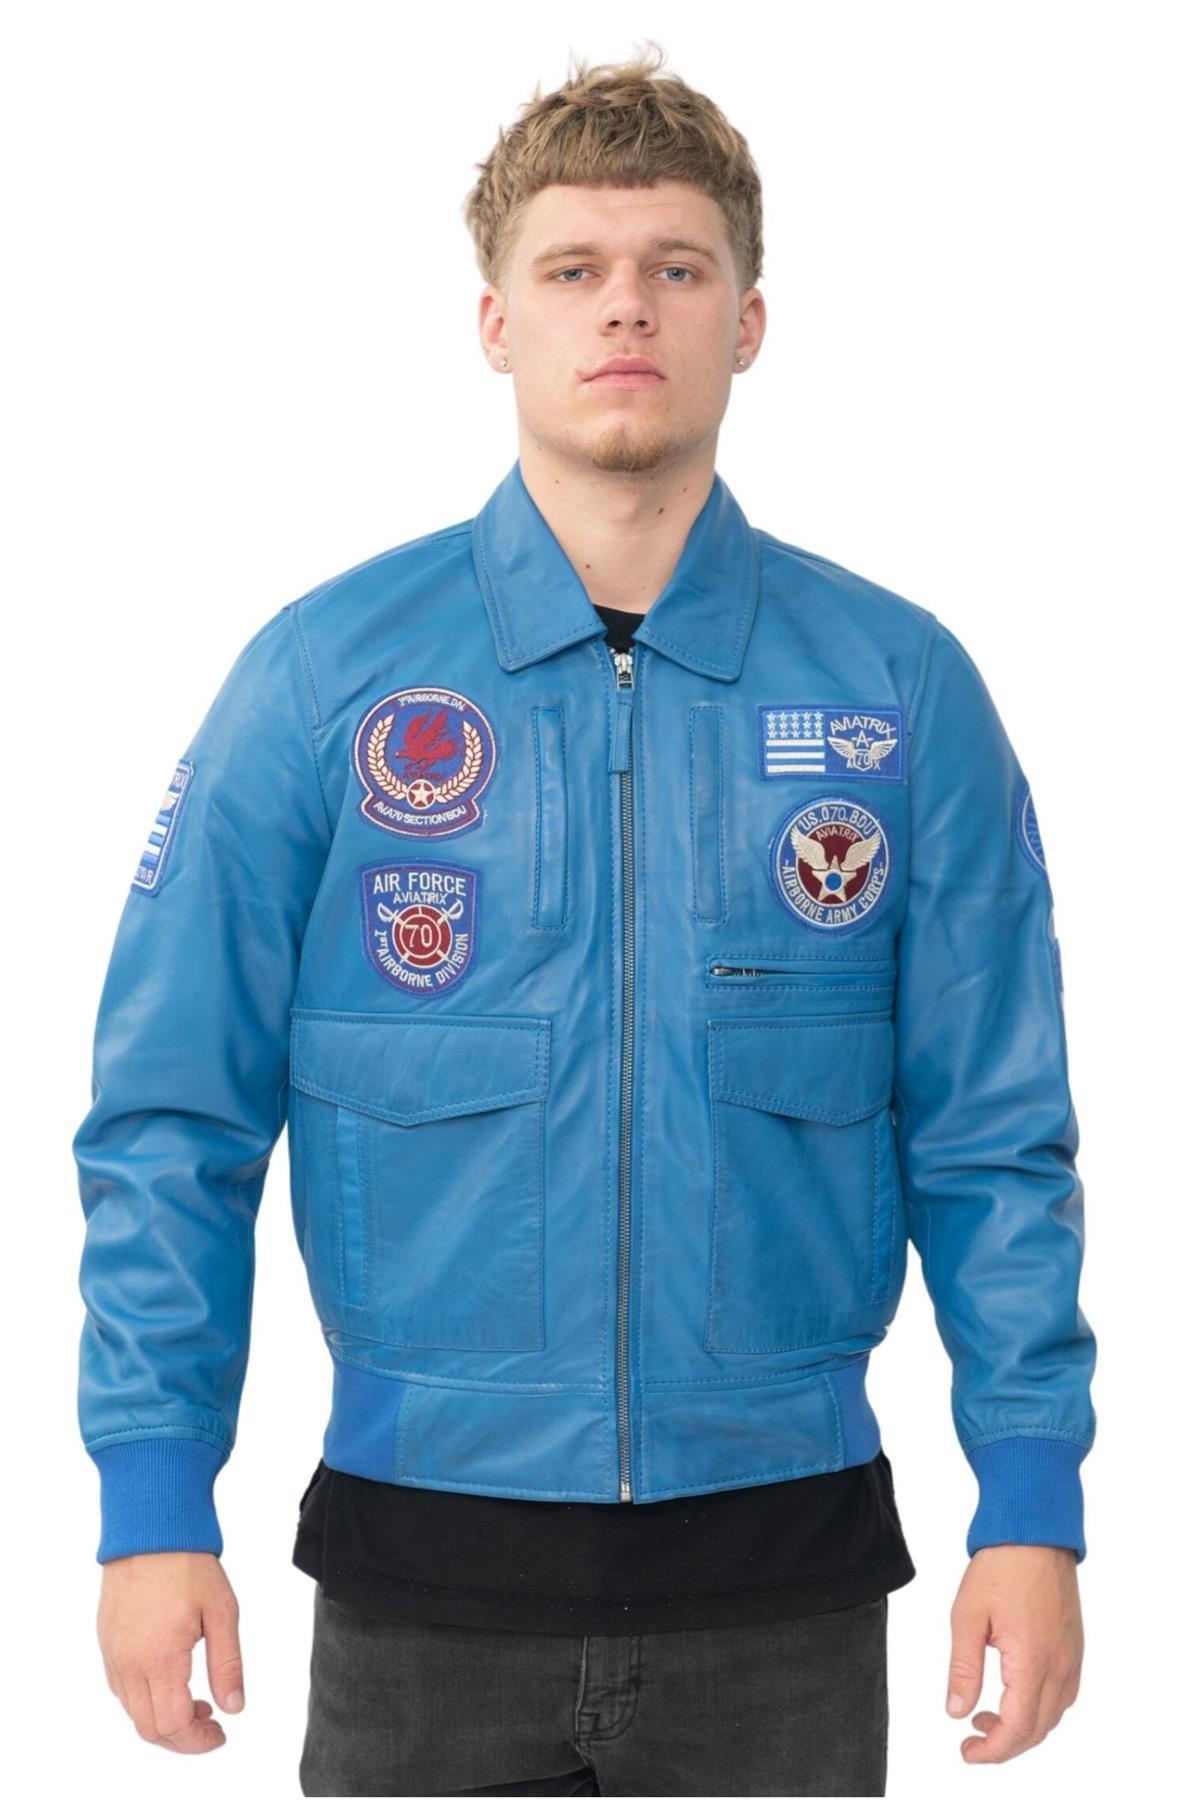 Кожаная куртка-бомбер ВВС - Дублин Infinity Leather, синий